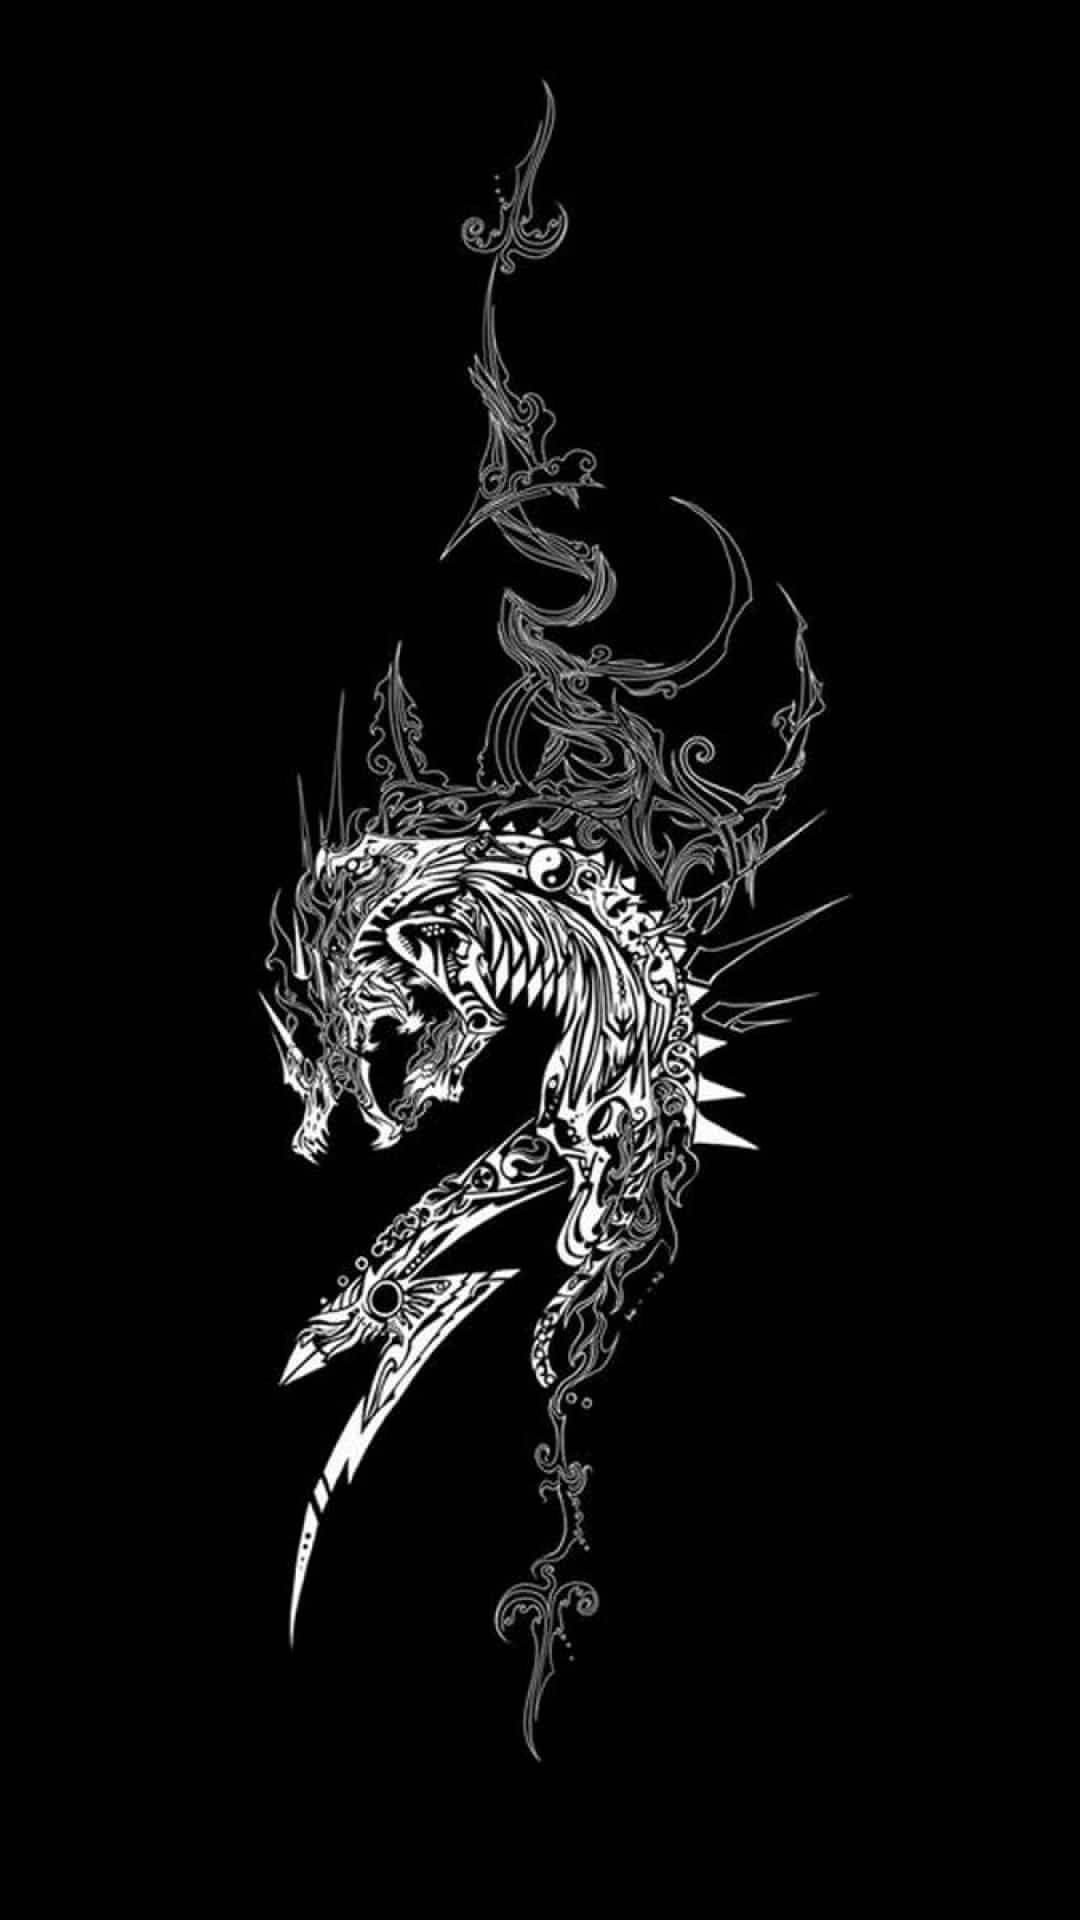 Dark Theme Black And White Dragon Smoke Background